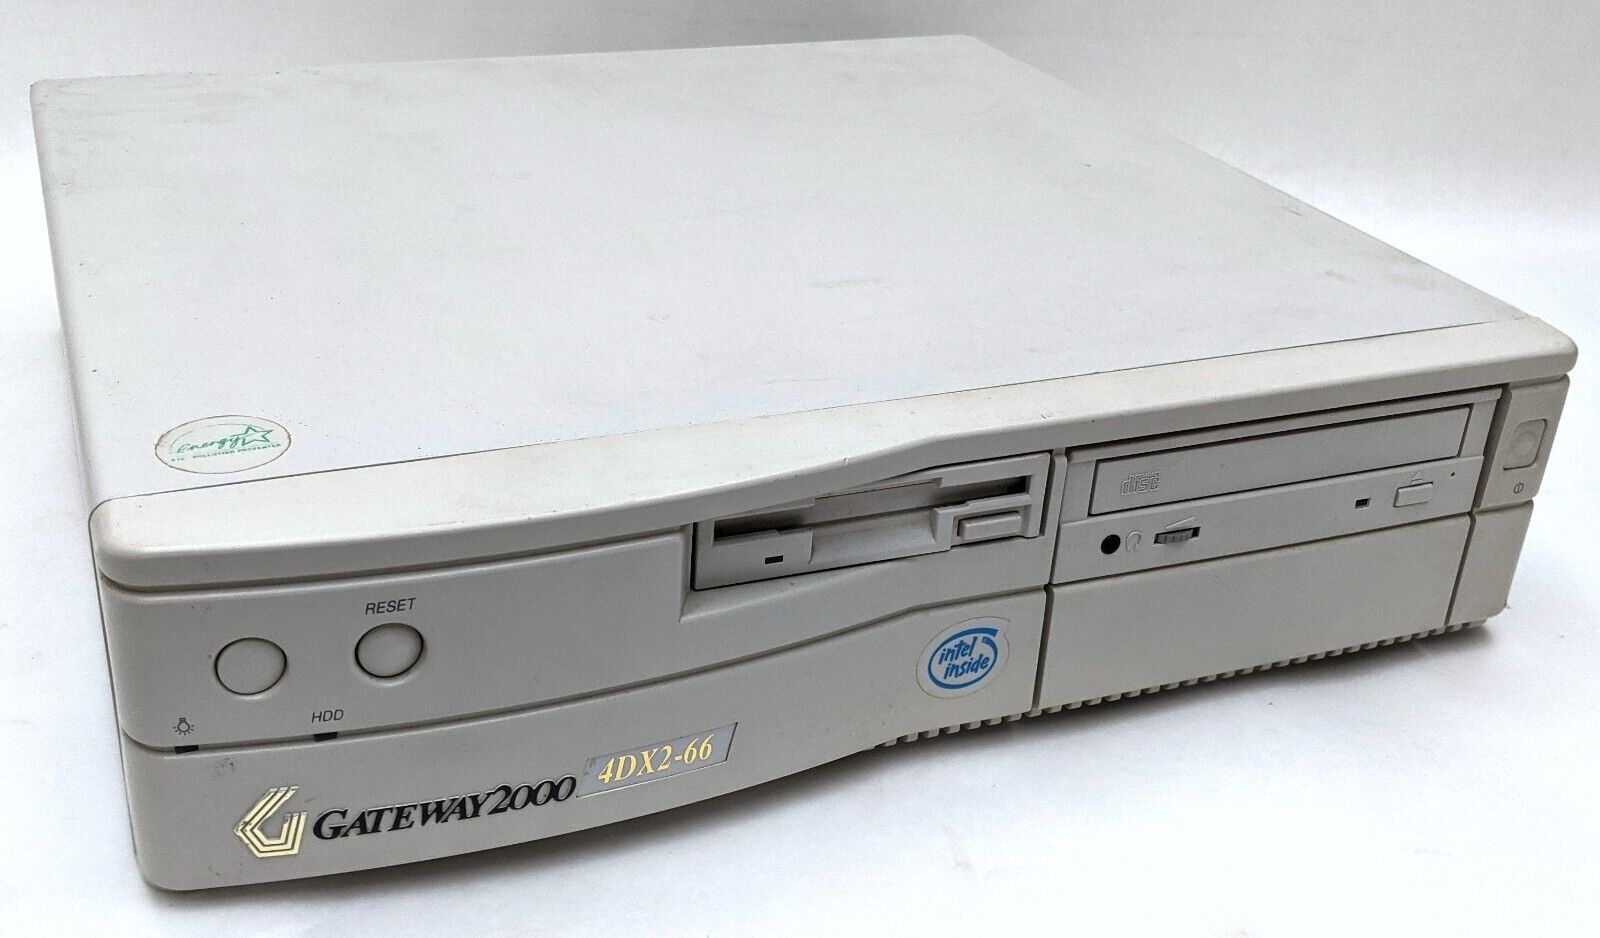 Vintage Gateway 2000 4DX2-66 Desktop Intel 486DX2 66MHz 640KB RAM No HDD No OS